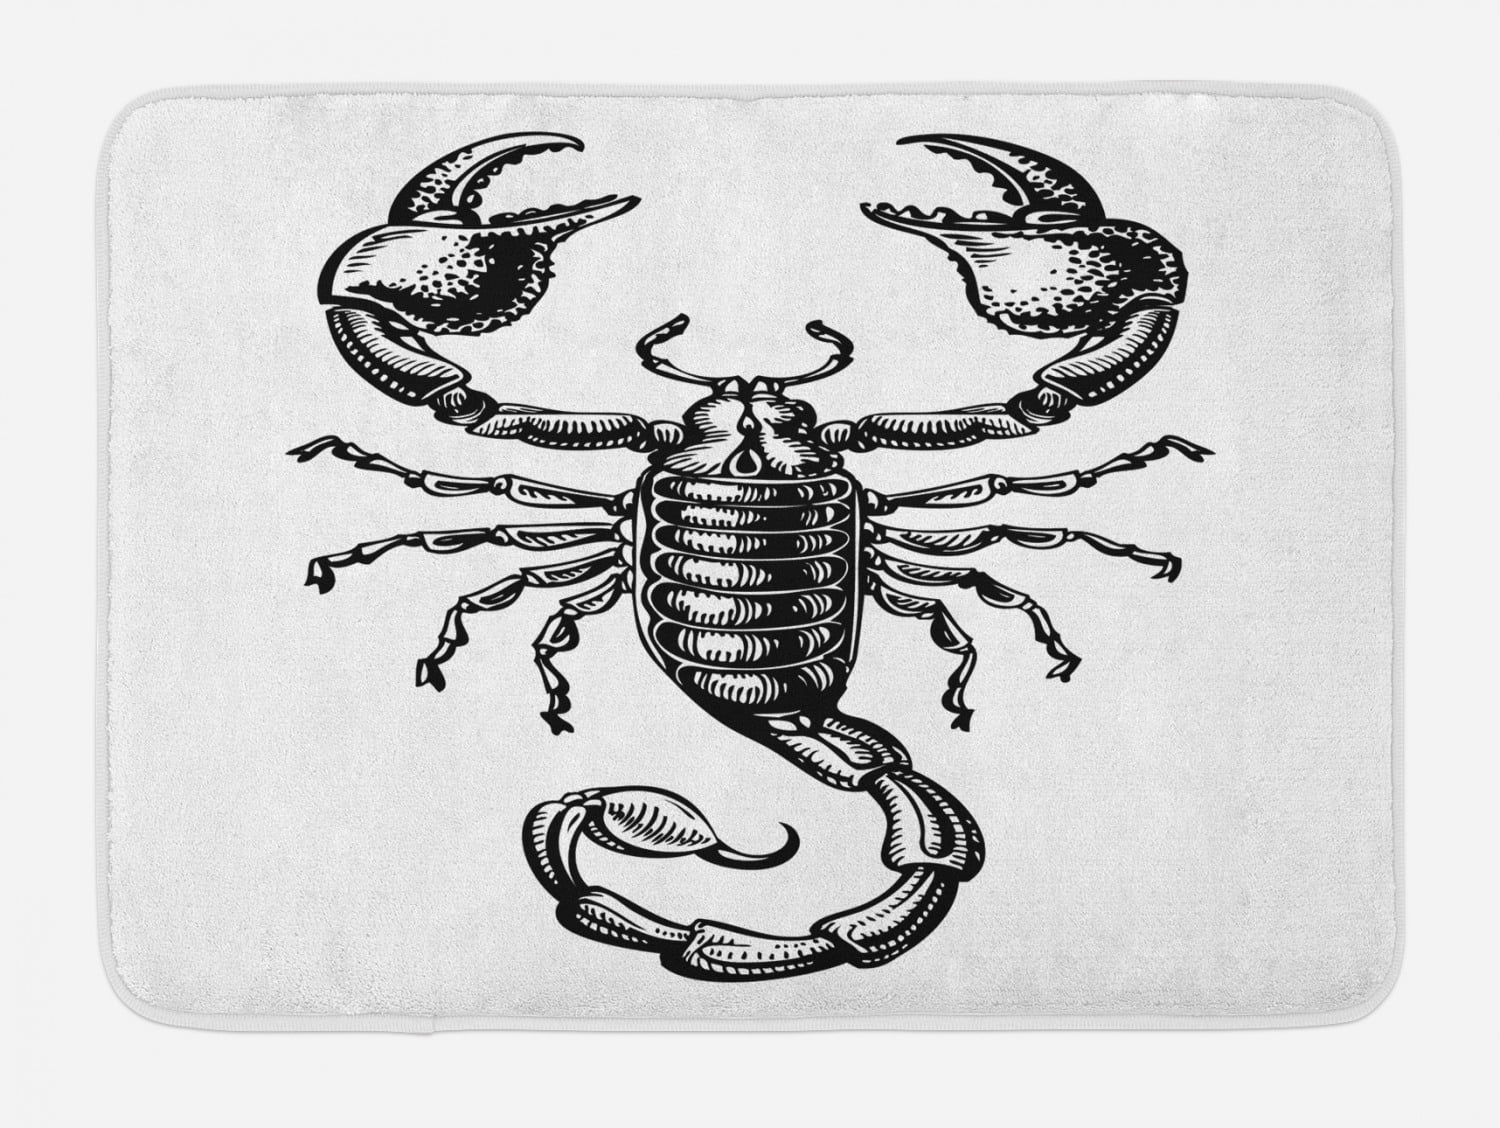 Zodiac Scorpio Bath Mat, Monochrome Sign Sketch Art of a Scorpion Tattoo  Animal Horoscopes Theme, Non-Slip Plush Mat Bathroom Kitchen Laundry Room  Decor,  X  Inches, Black and White, Ambesonne -